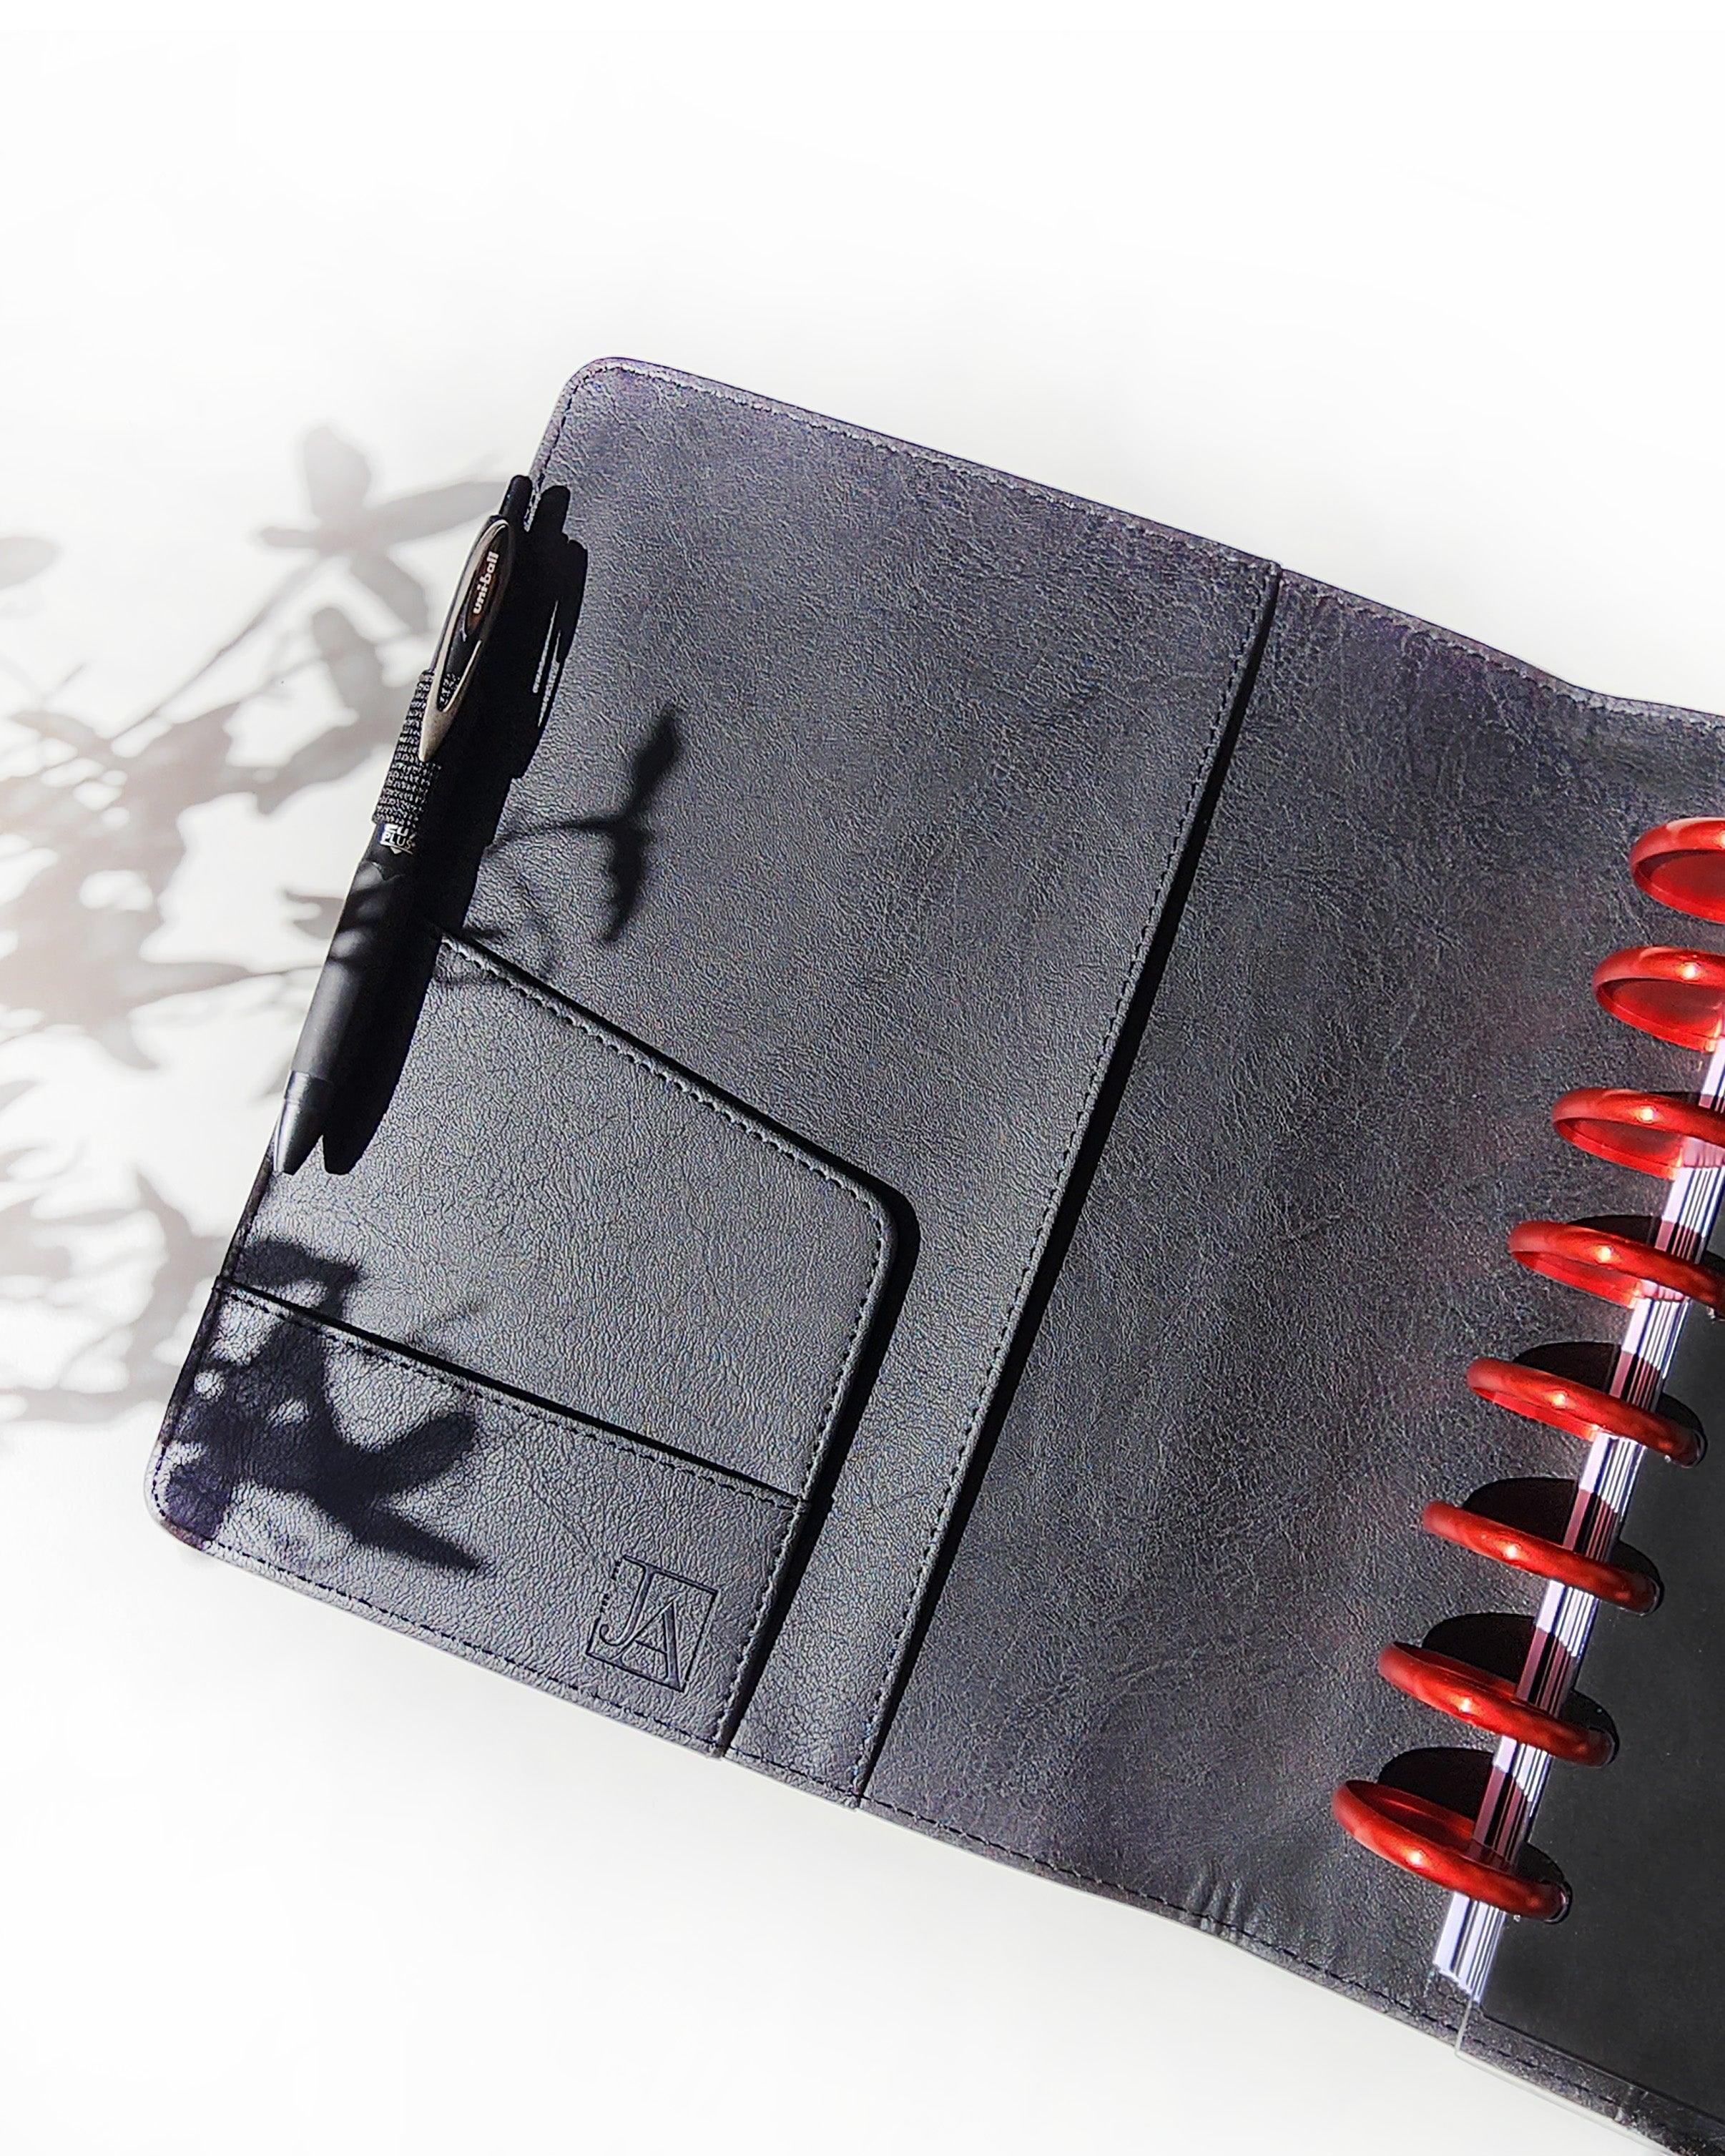 Vegan leather black discbound planner cover and planner notebook portfolio for discbound planners by Janes Agenda.